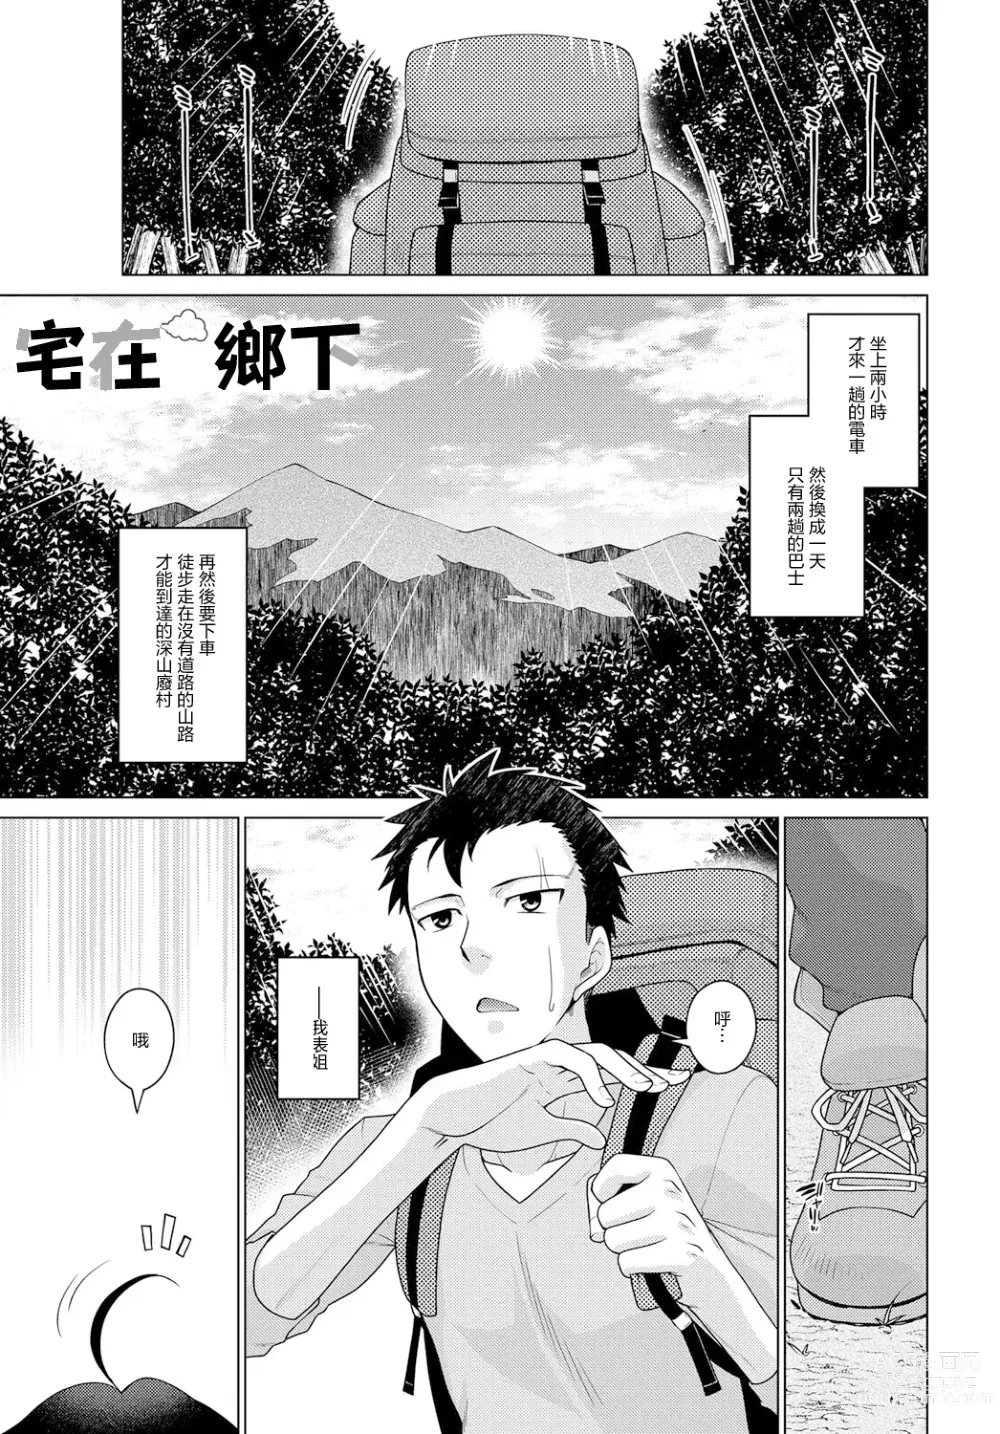 Page 1 of manga 宅在鄉下